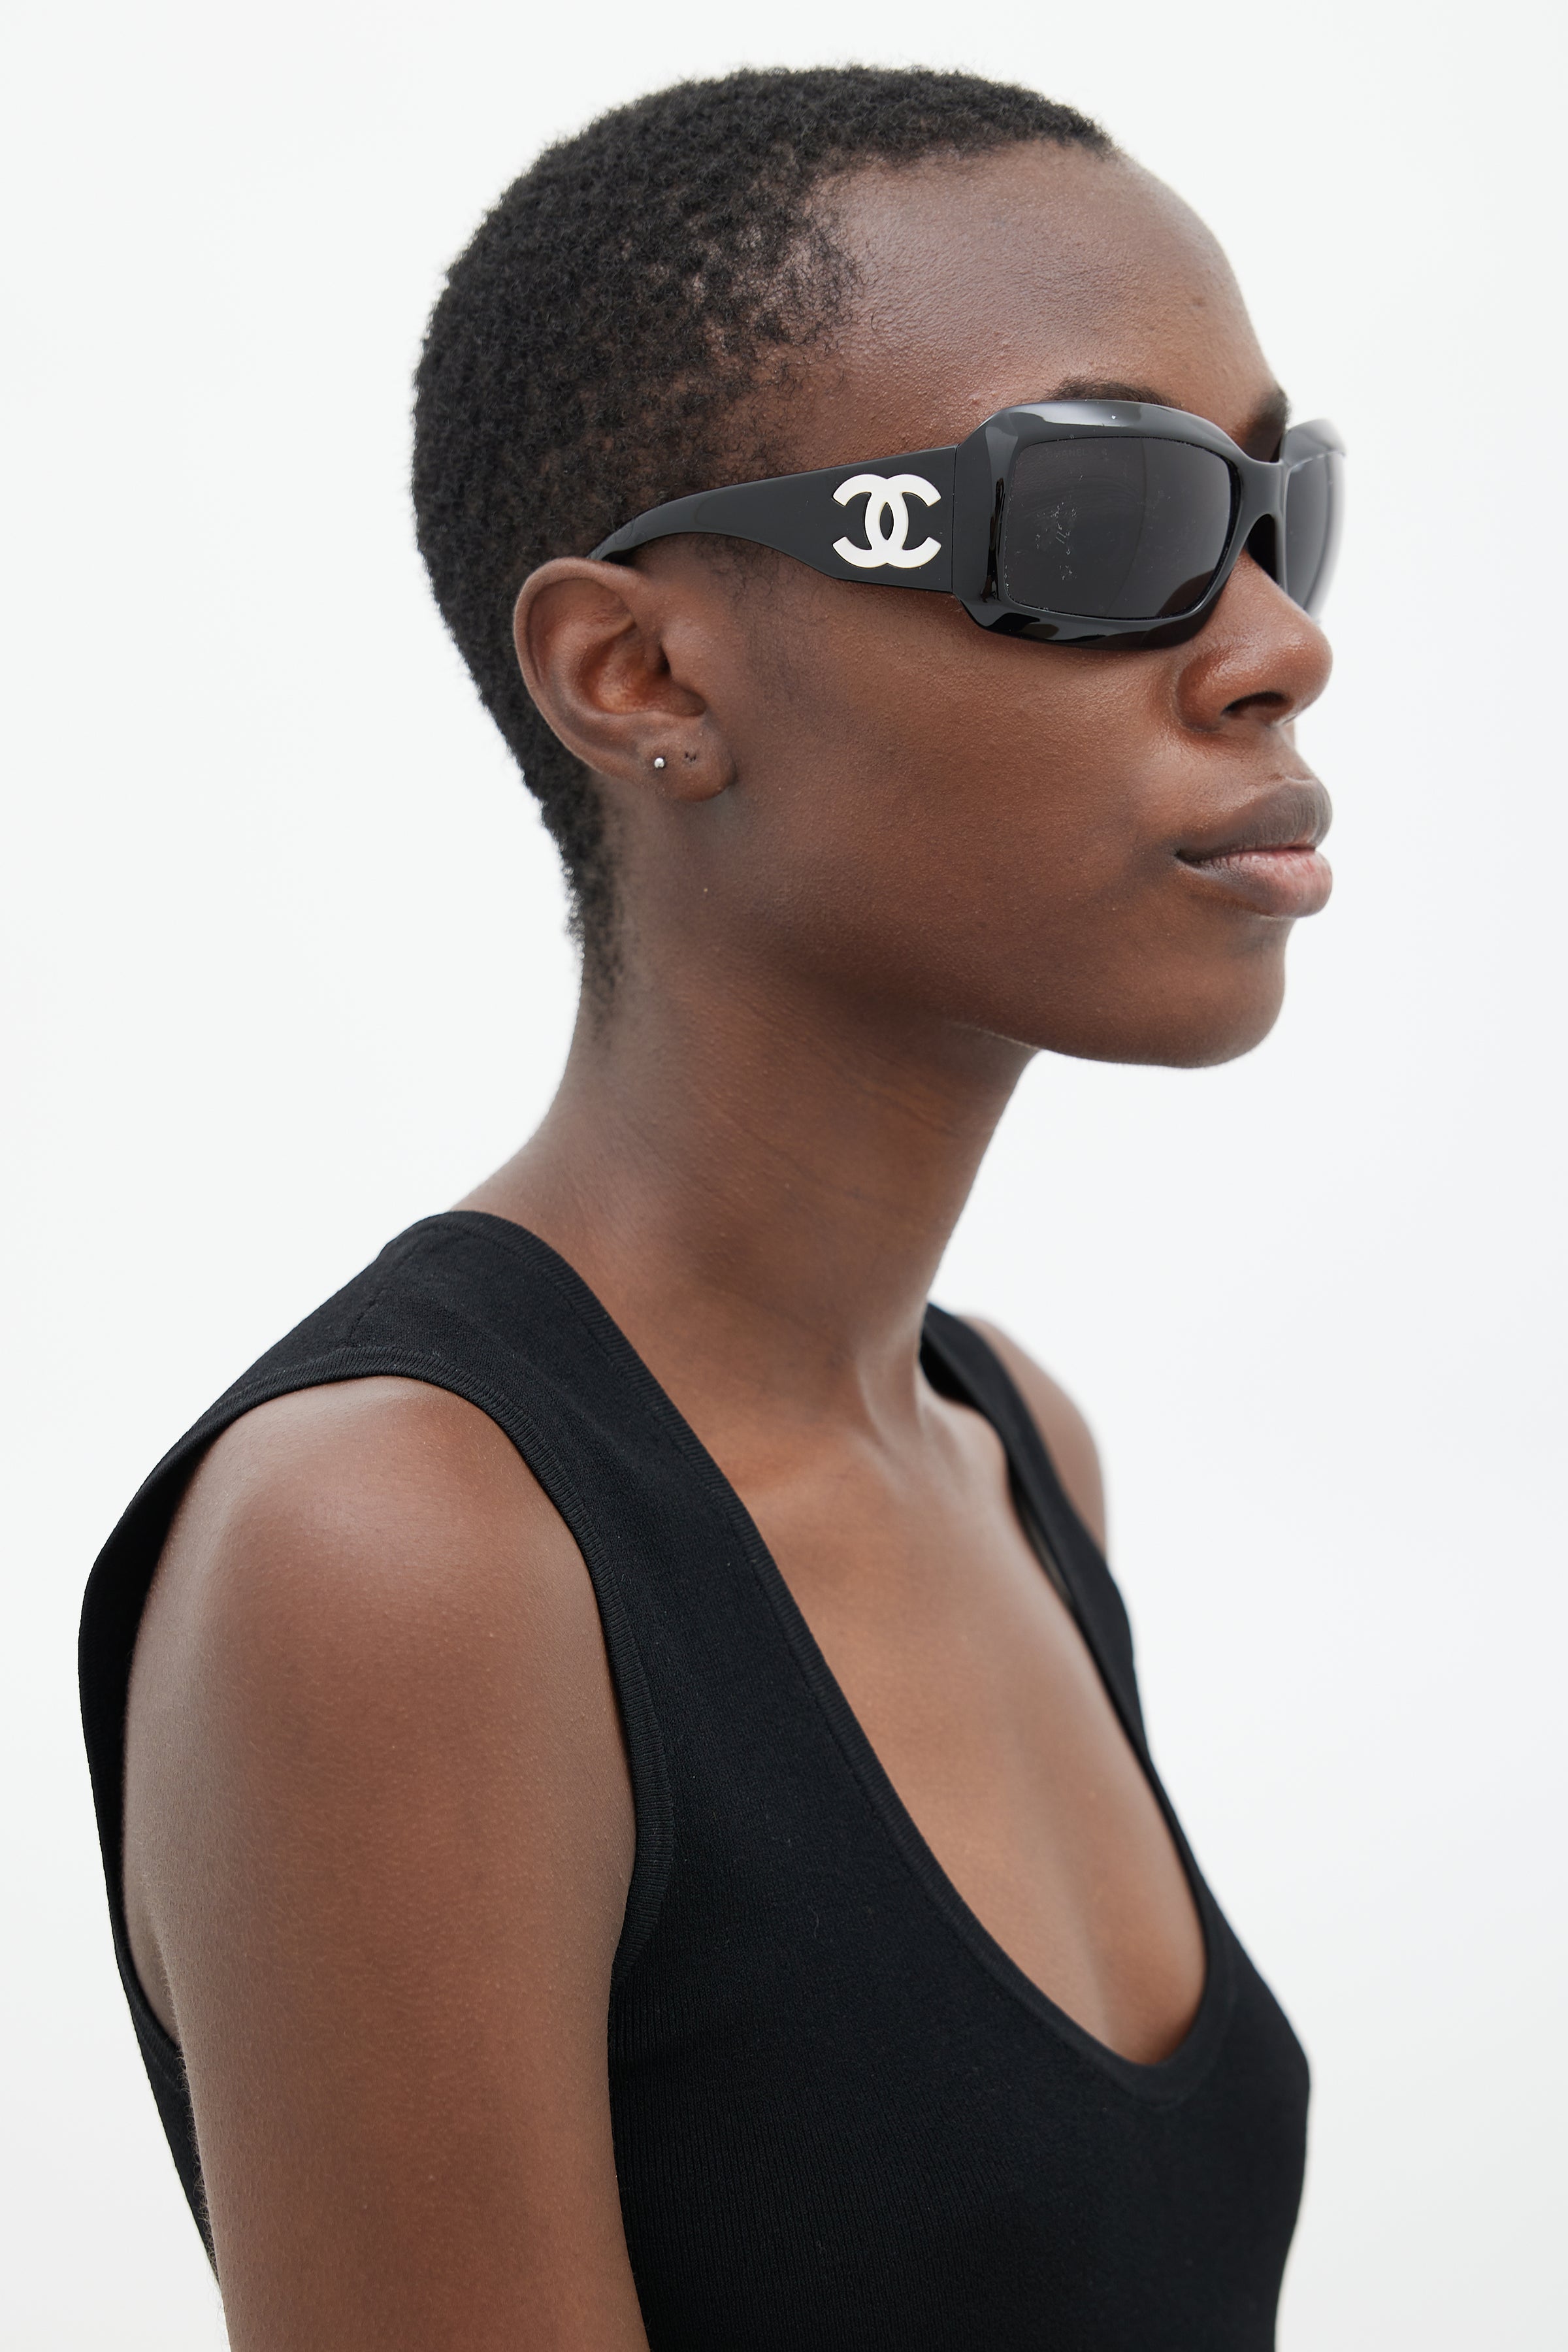 chanel acetate rectangle sunglasses